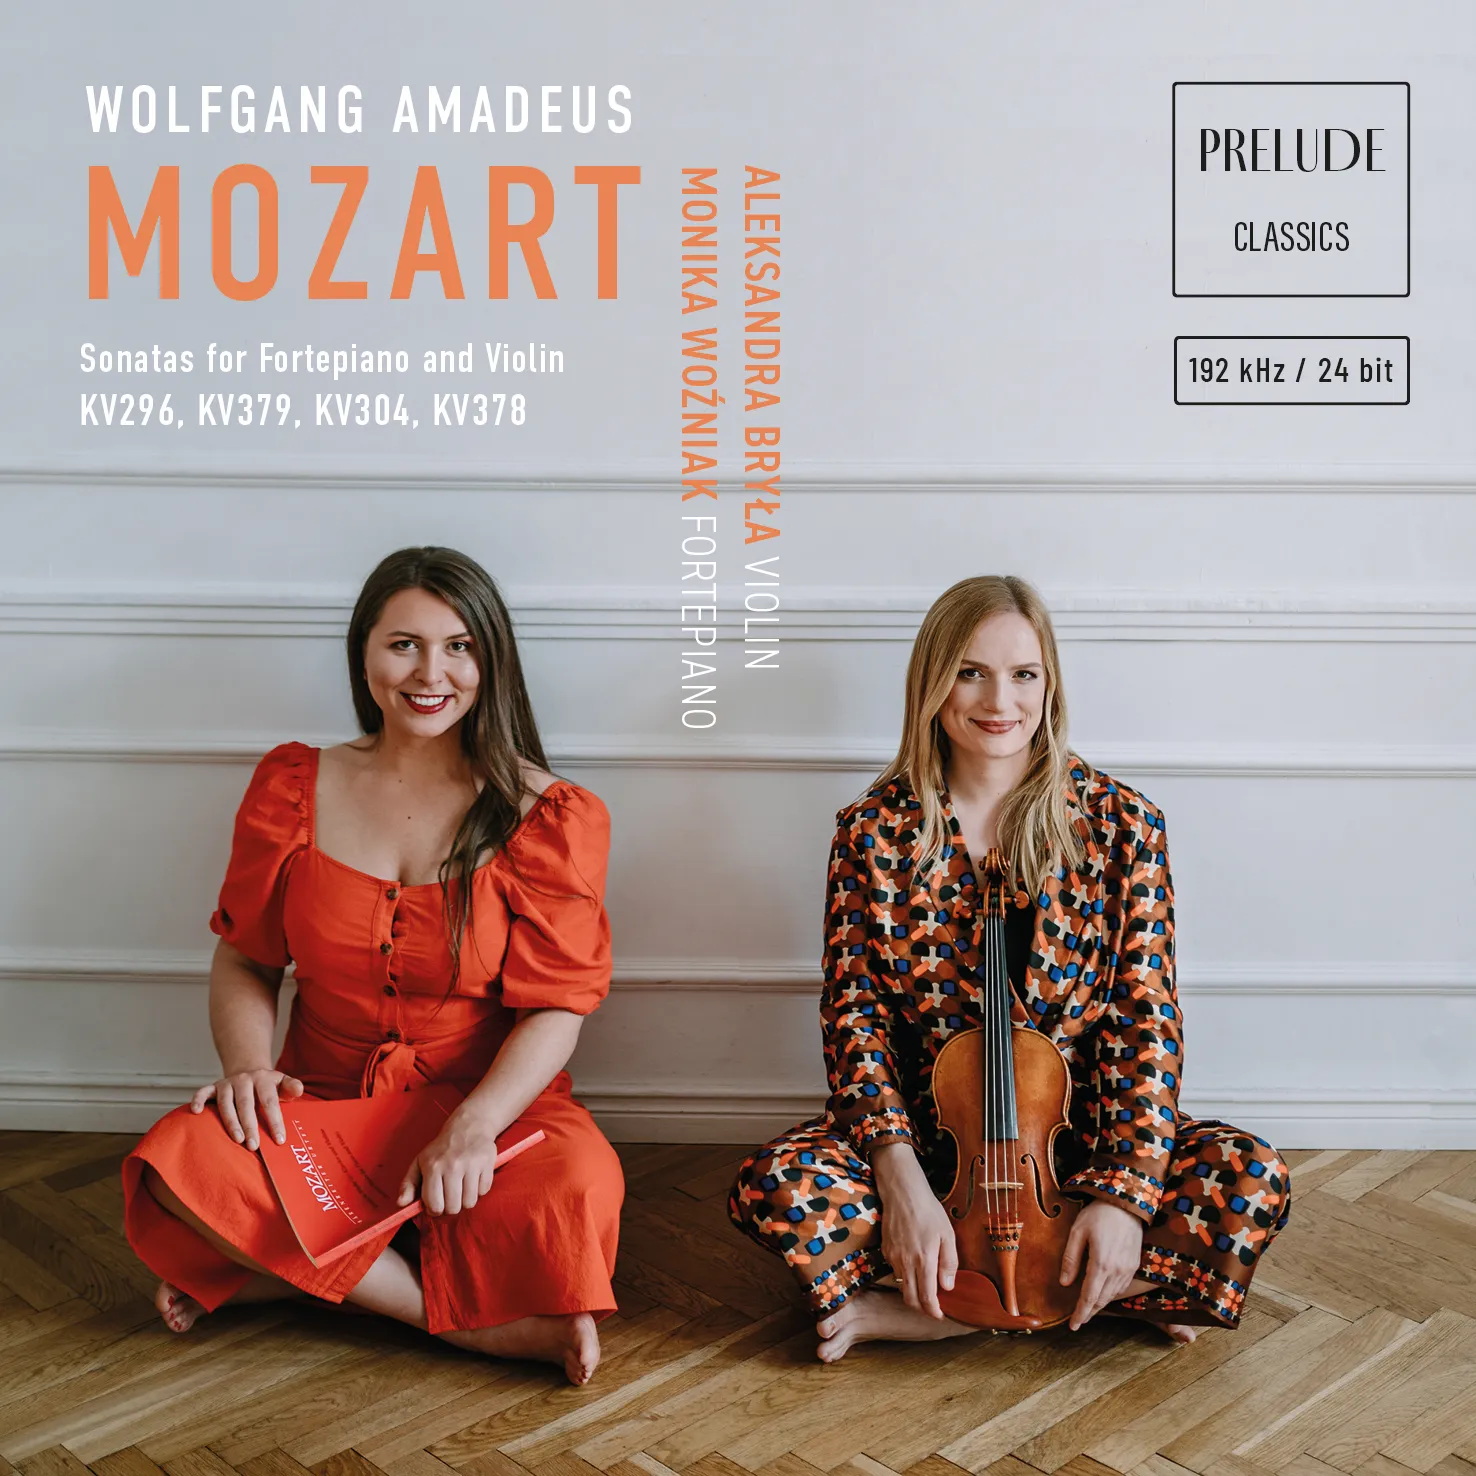 MOZART - Sonatas for Fortepiano and Violin